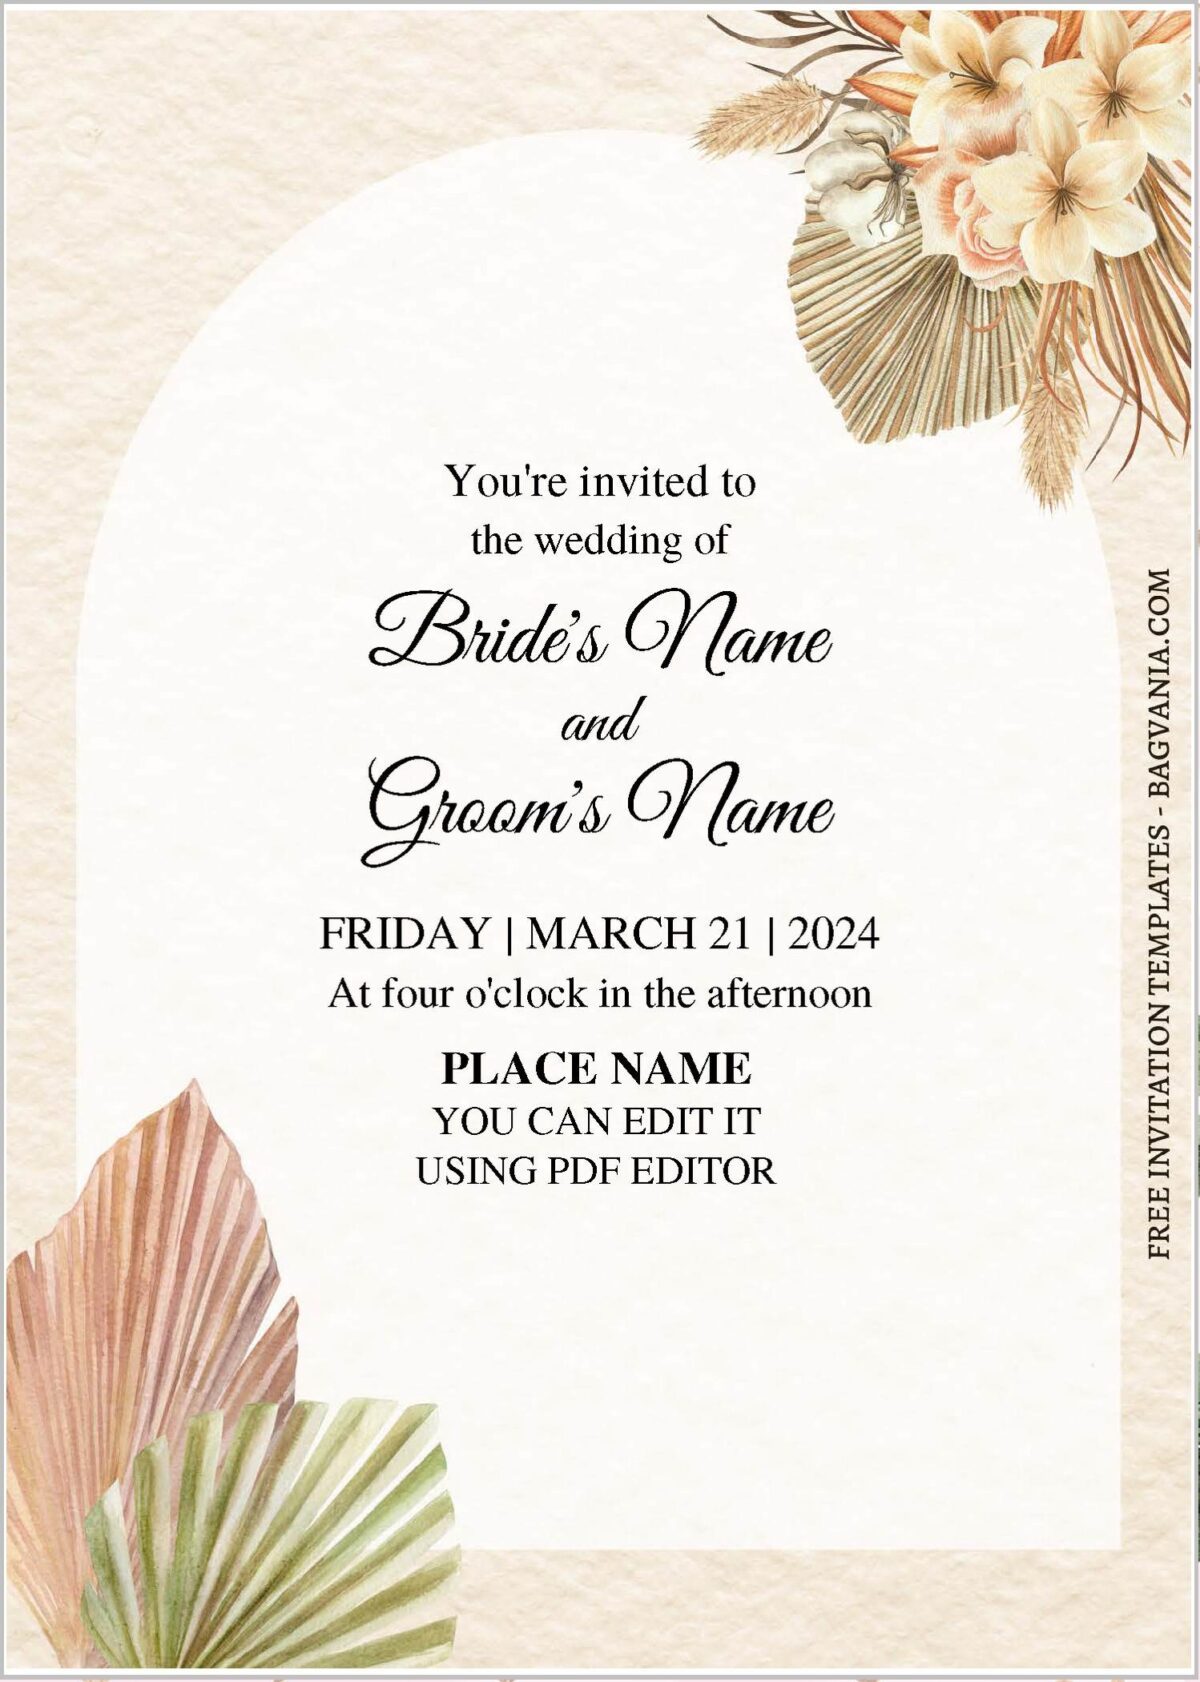 (Free Editable PDF) Vintage Rustic Greenery Wedding Invitation Templates with dried foliage